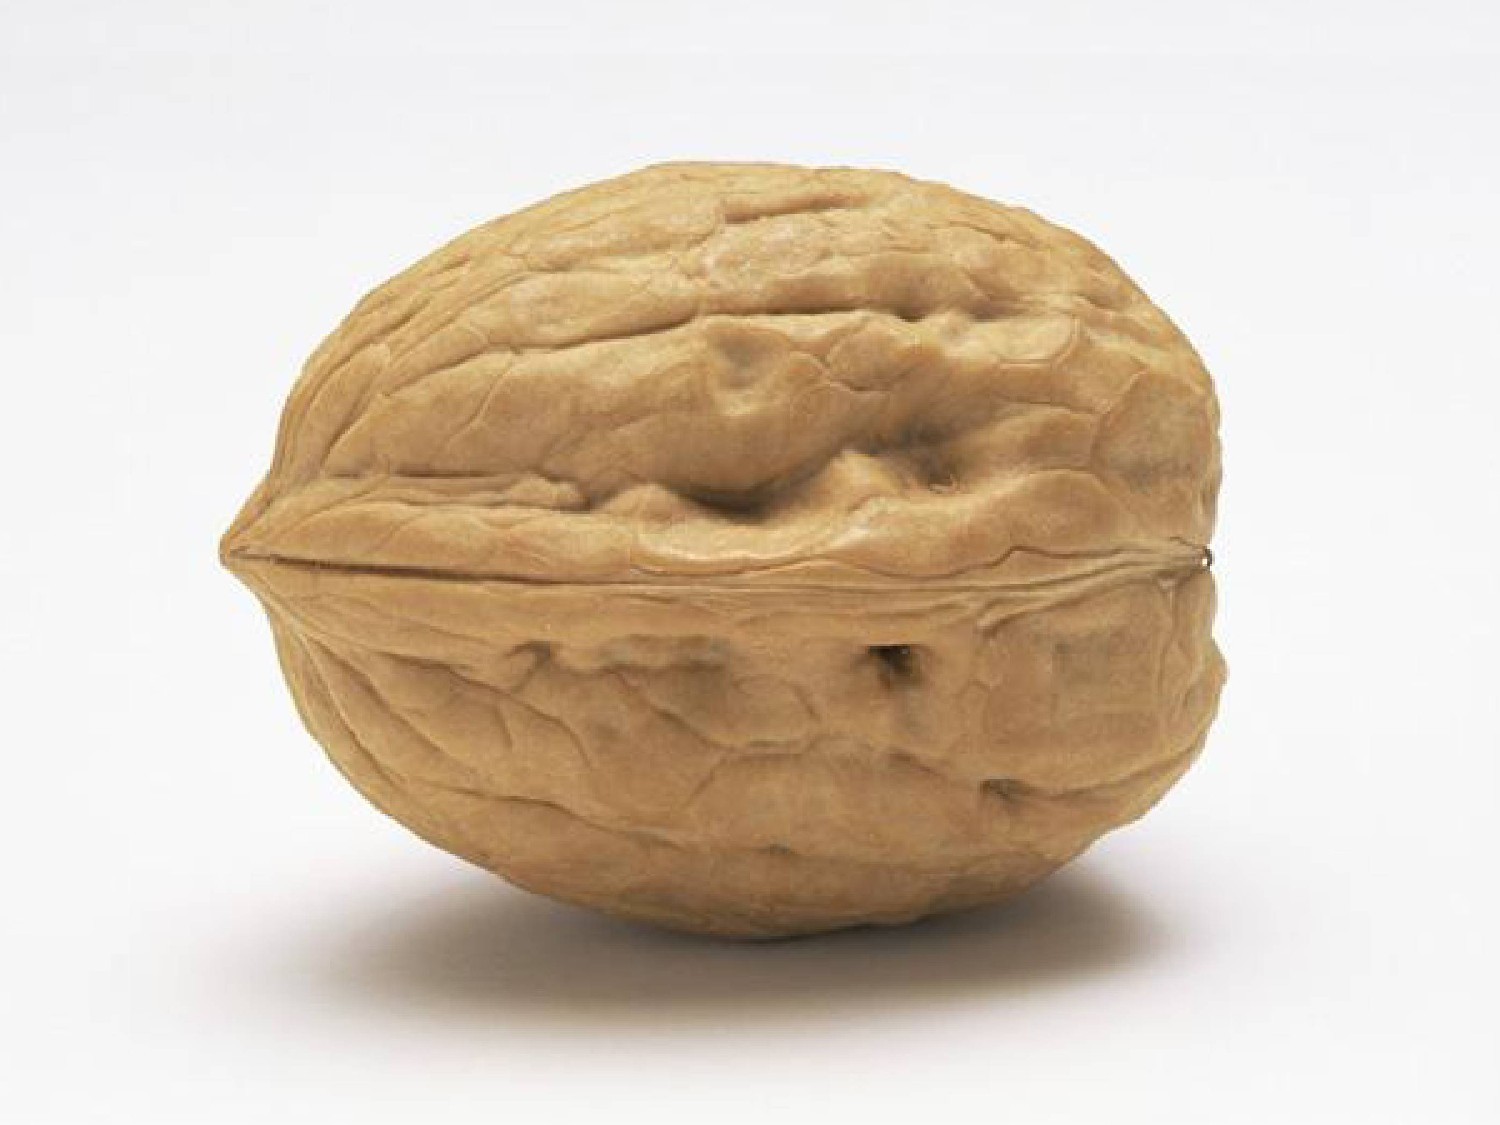 Орех похожий на мозг. Грецкий орех неочищенный Чили. Большой грецкий орех. Сорт крупного грецкого ореха. Орехи на белом фоне.